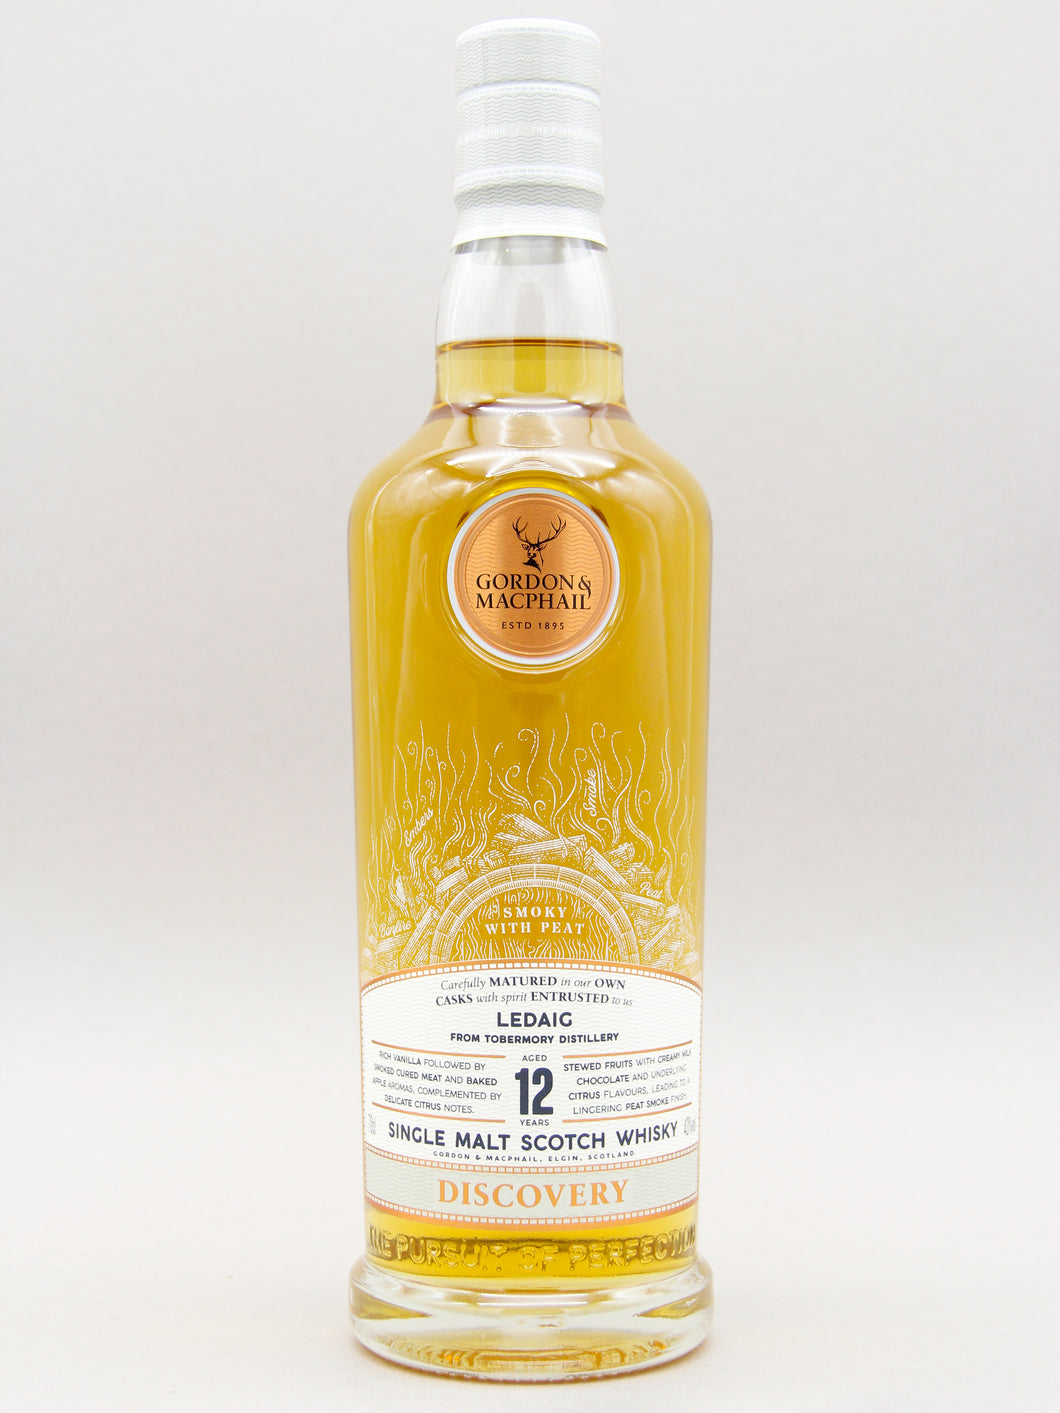 Gordon & Macphail Discovery, Ledaig 12 Years, Tobermory, Single Malt Scotch Whisky (43%, 70cl)